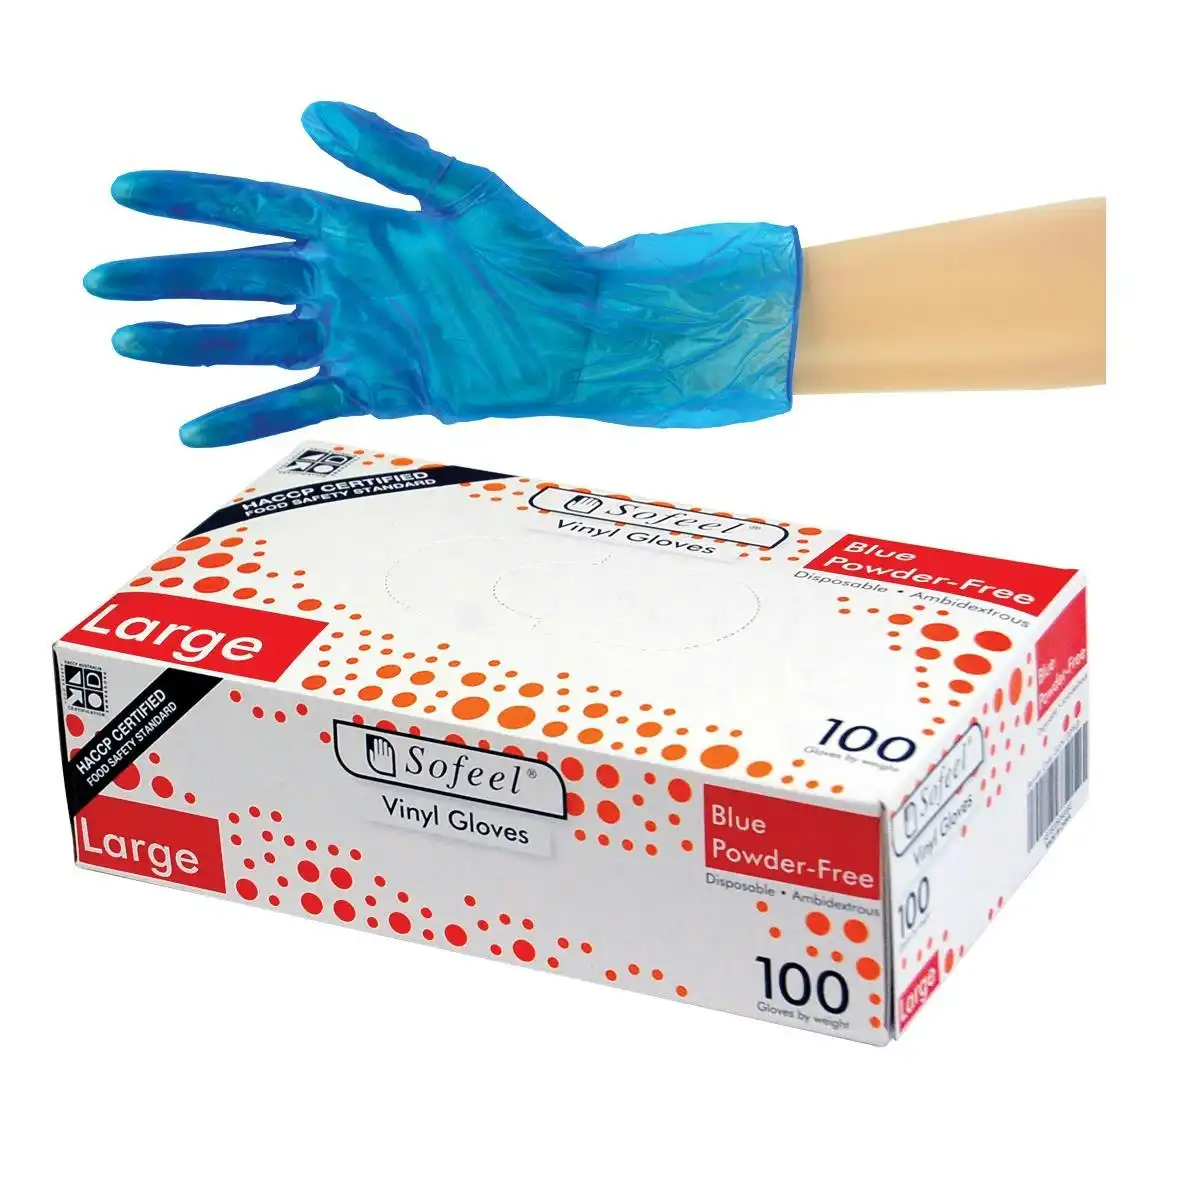 Sofeel Vinyl Powder Free Gloves 5.0g Large Blue HACCP Grade 100 Box x10